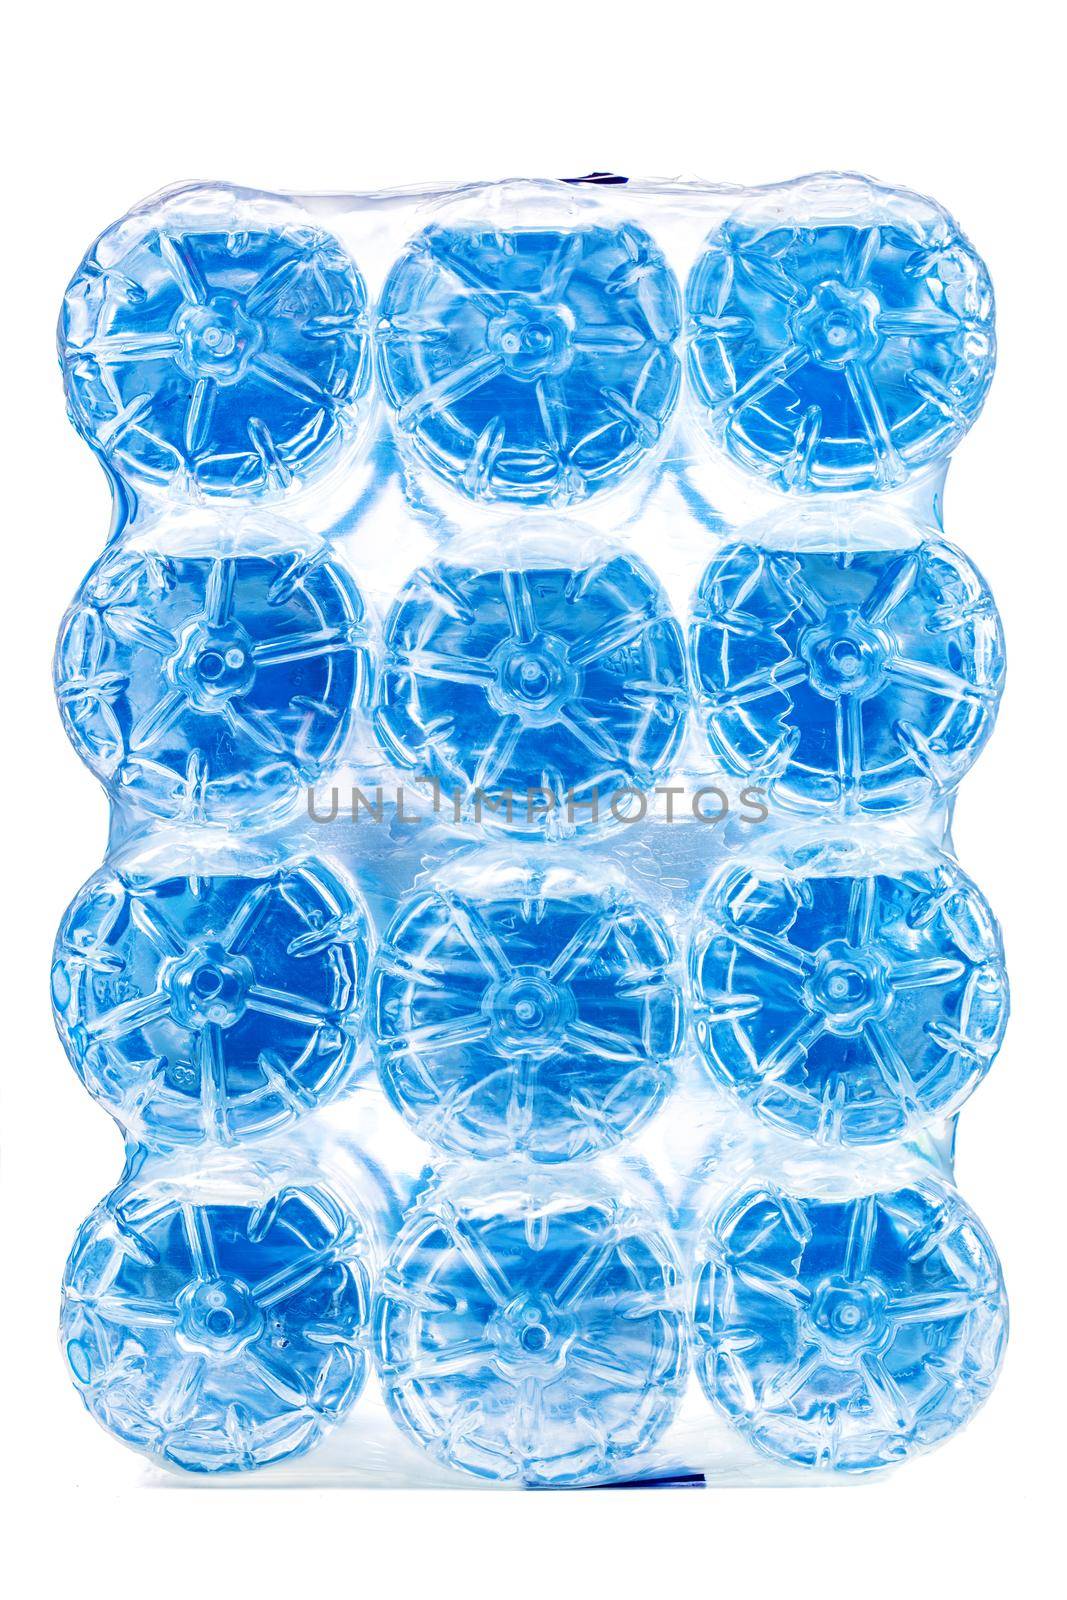 pack of twelve plastic bottles with water